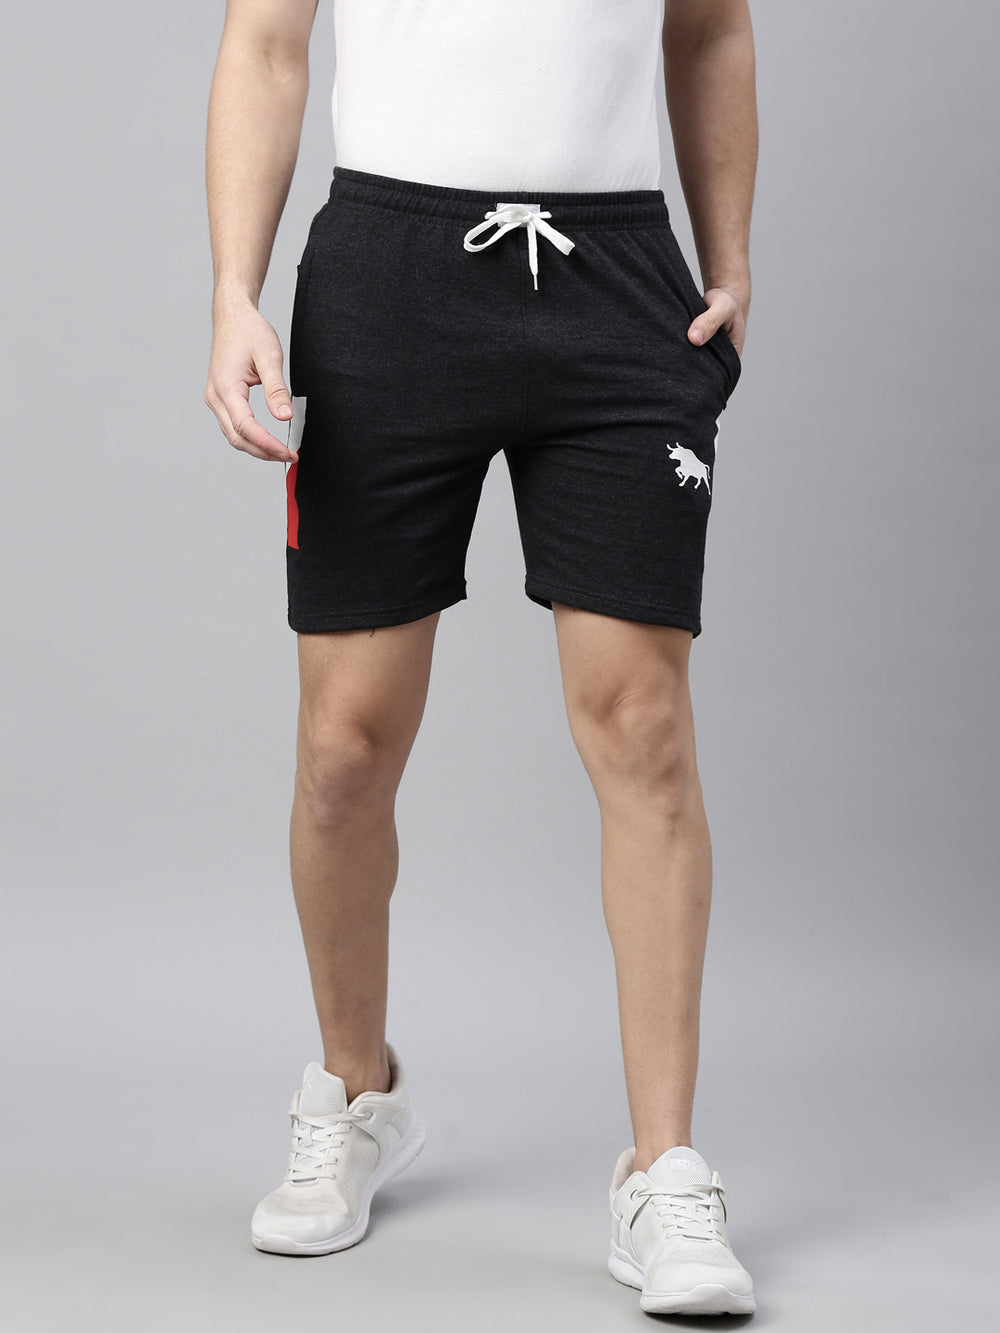 Charcoal Grey Side Block Print Shorts Men's Shorts Bushirt   